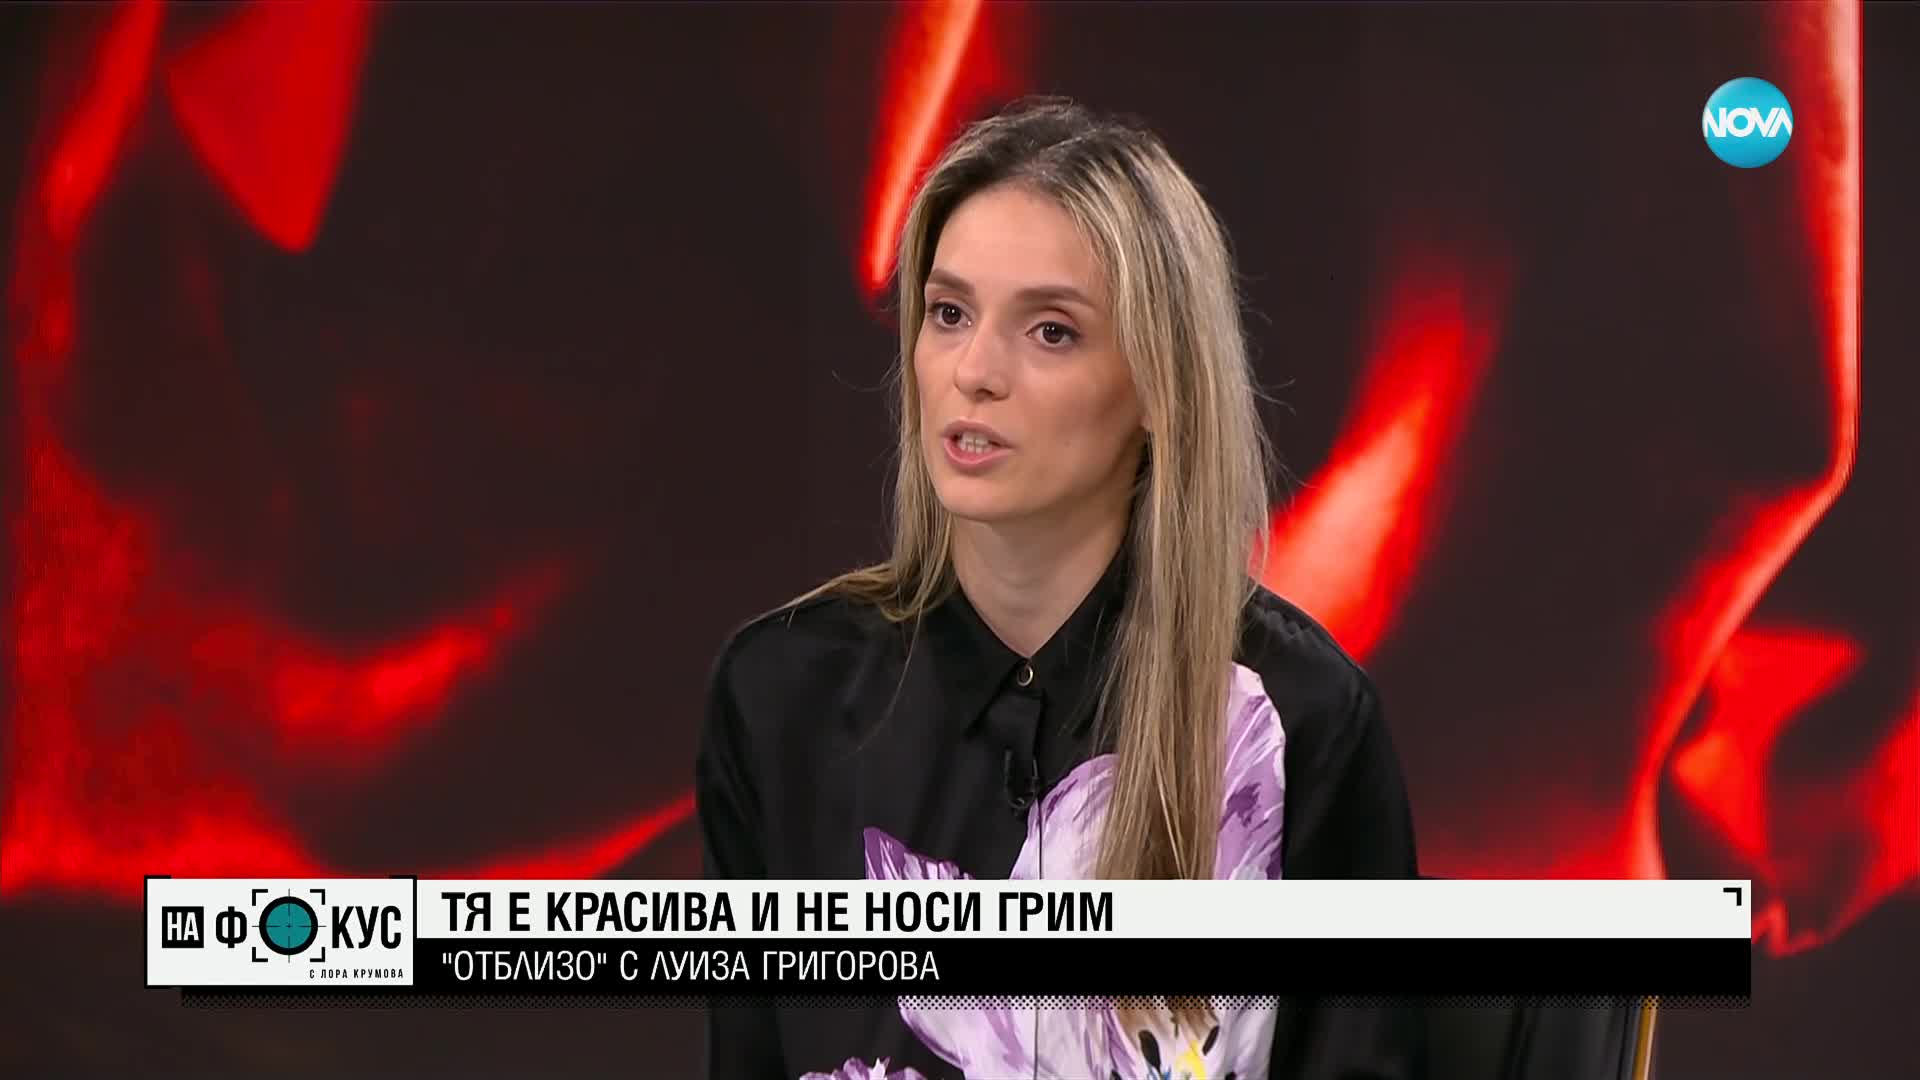 Луиза Григорова: Не само спрямо жените, но и спрямо мъжете има насилие